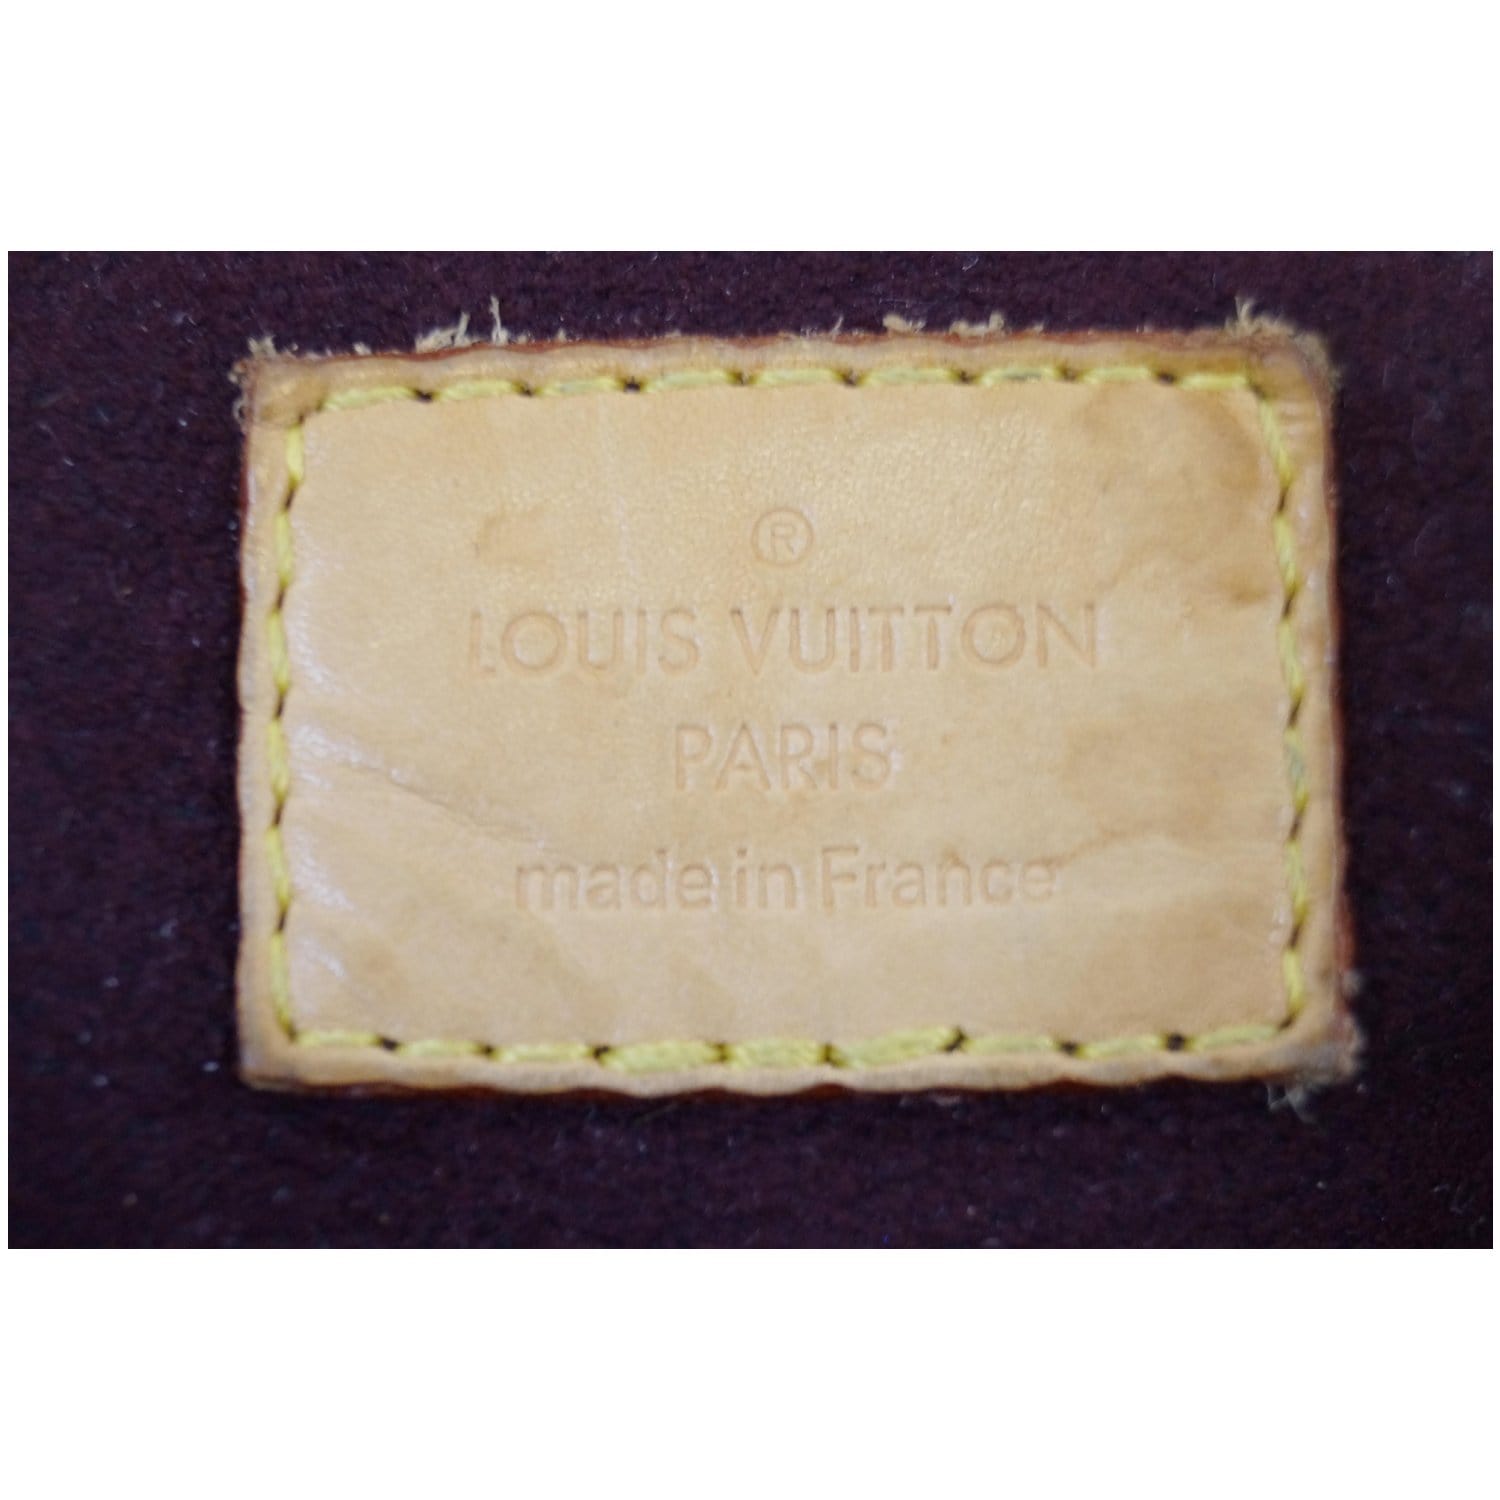 Louis Vuitton LOUIS VUITTON Shoulder Bag Monogram Sample Seed  Canvas/Leather Brown/Black/Red Gold Women's M43714